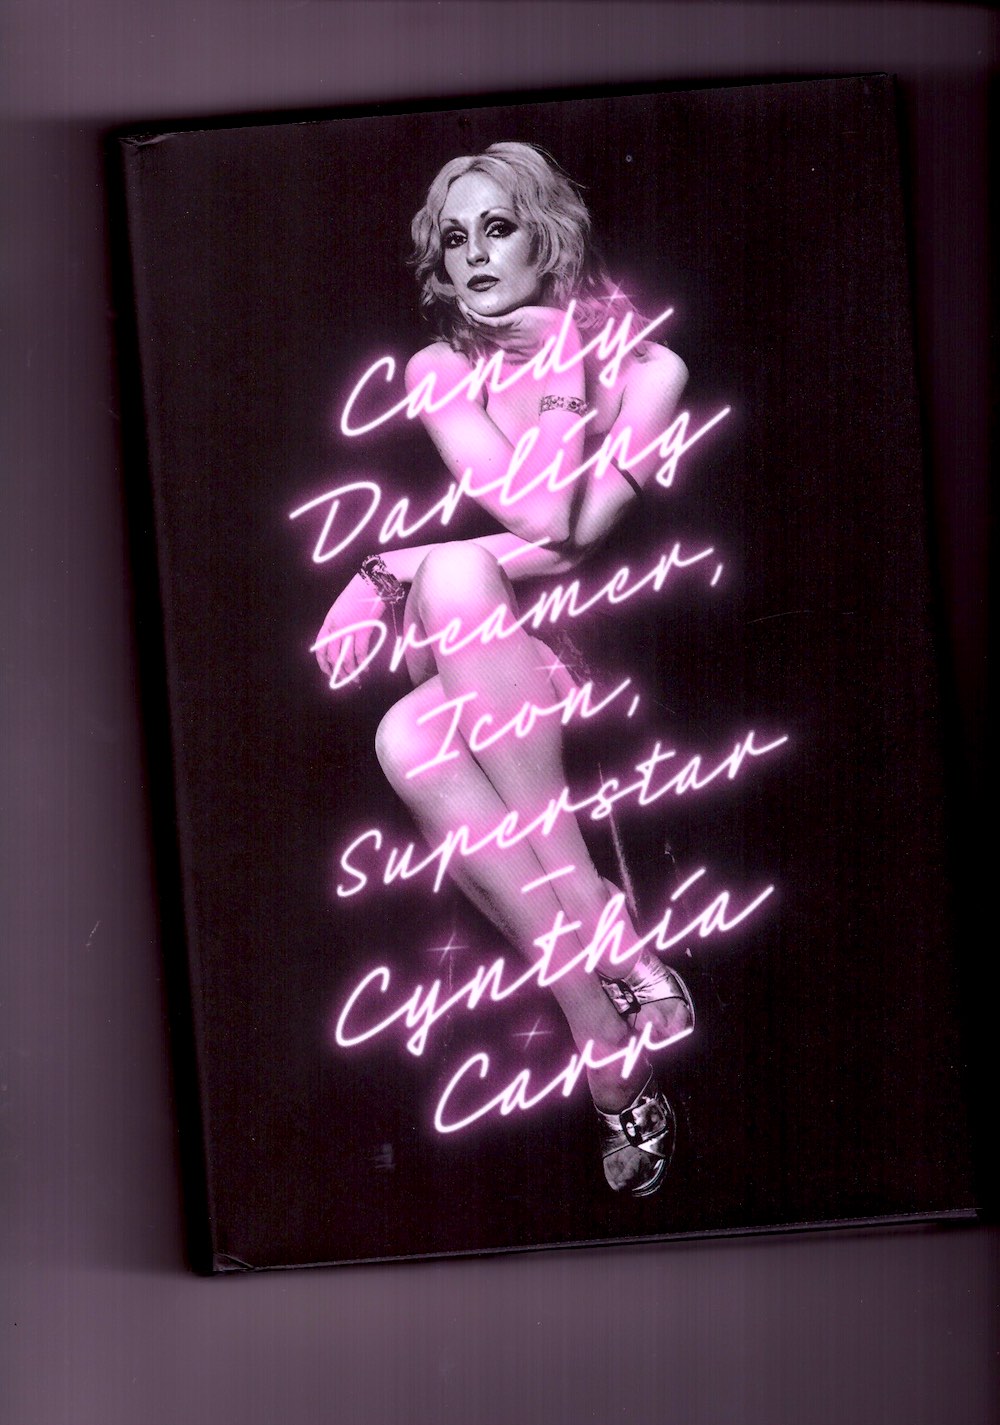 CARR, Cynthia - Candy Darling. Dreamer, Icon, Superstar